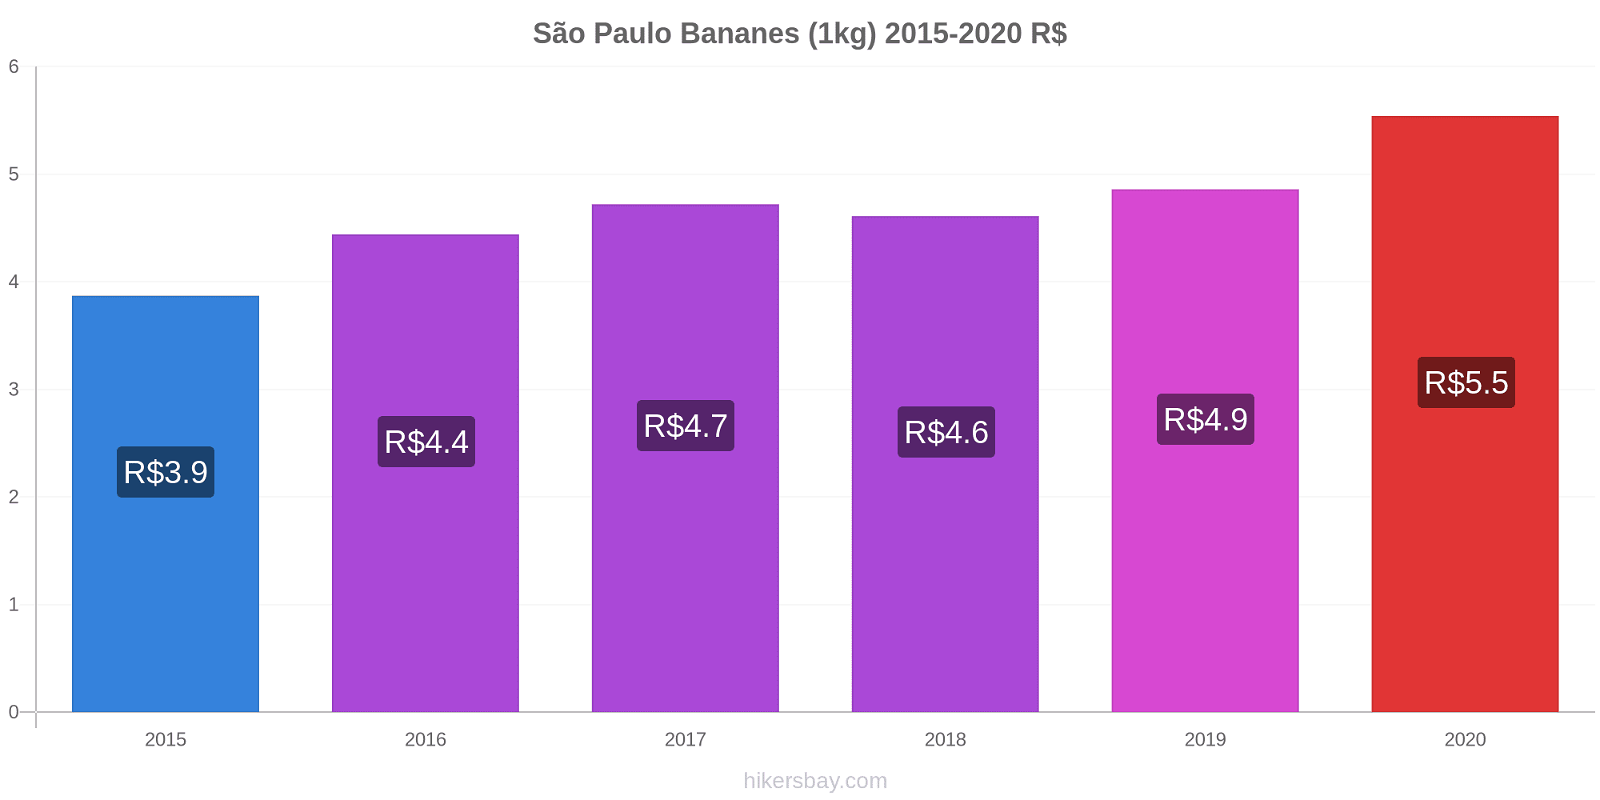 São Paulo changements de prix Bananes (1kg) hikersbay.com